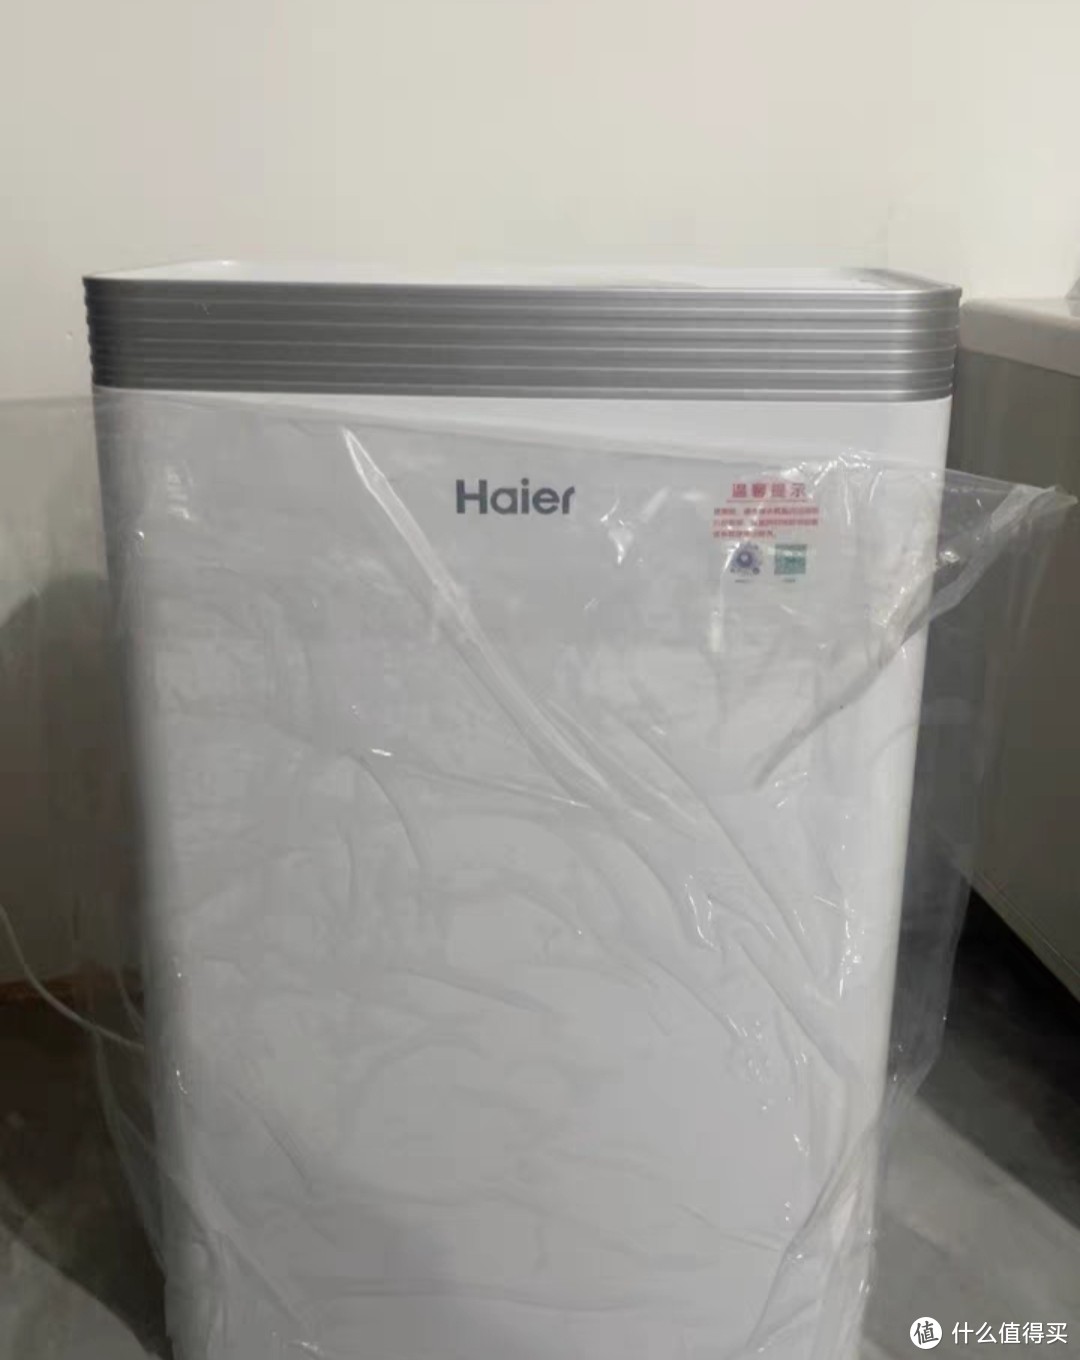 Haier/海尔 KJ207F-HY01空气净化器